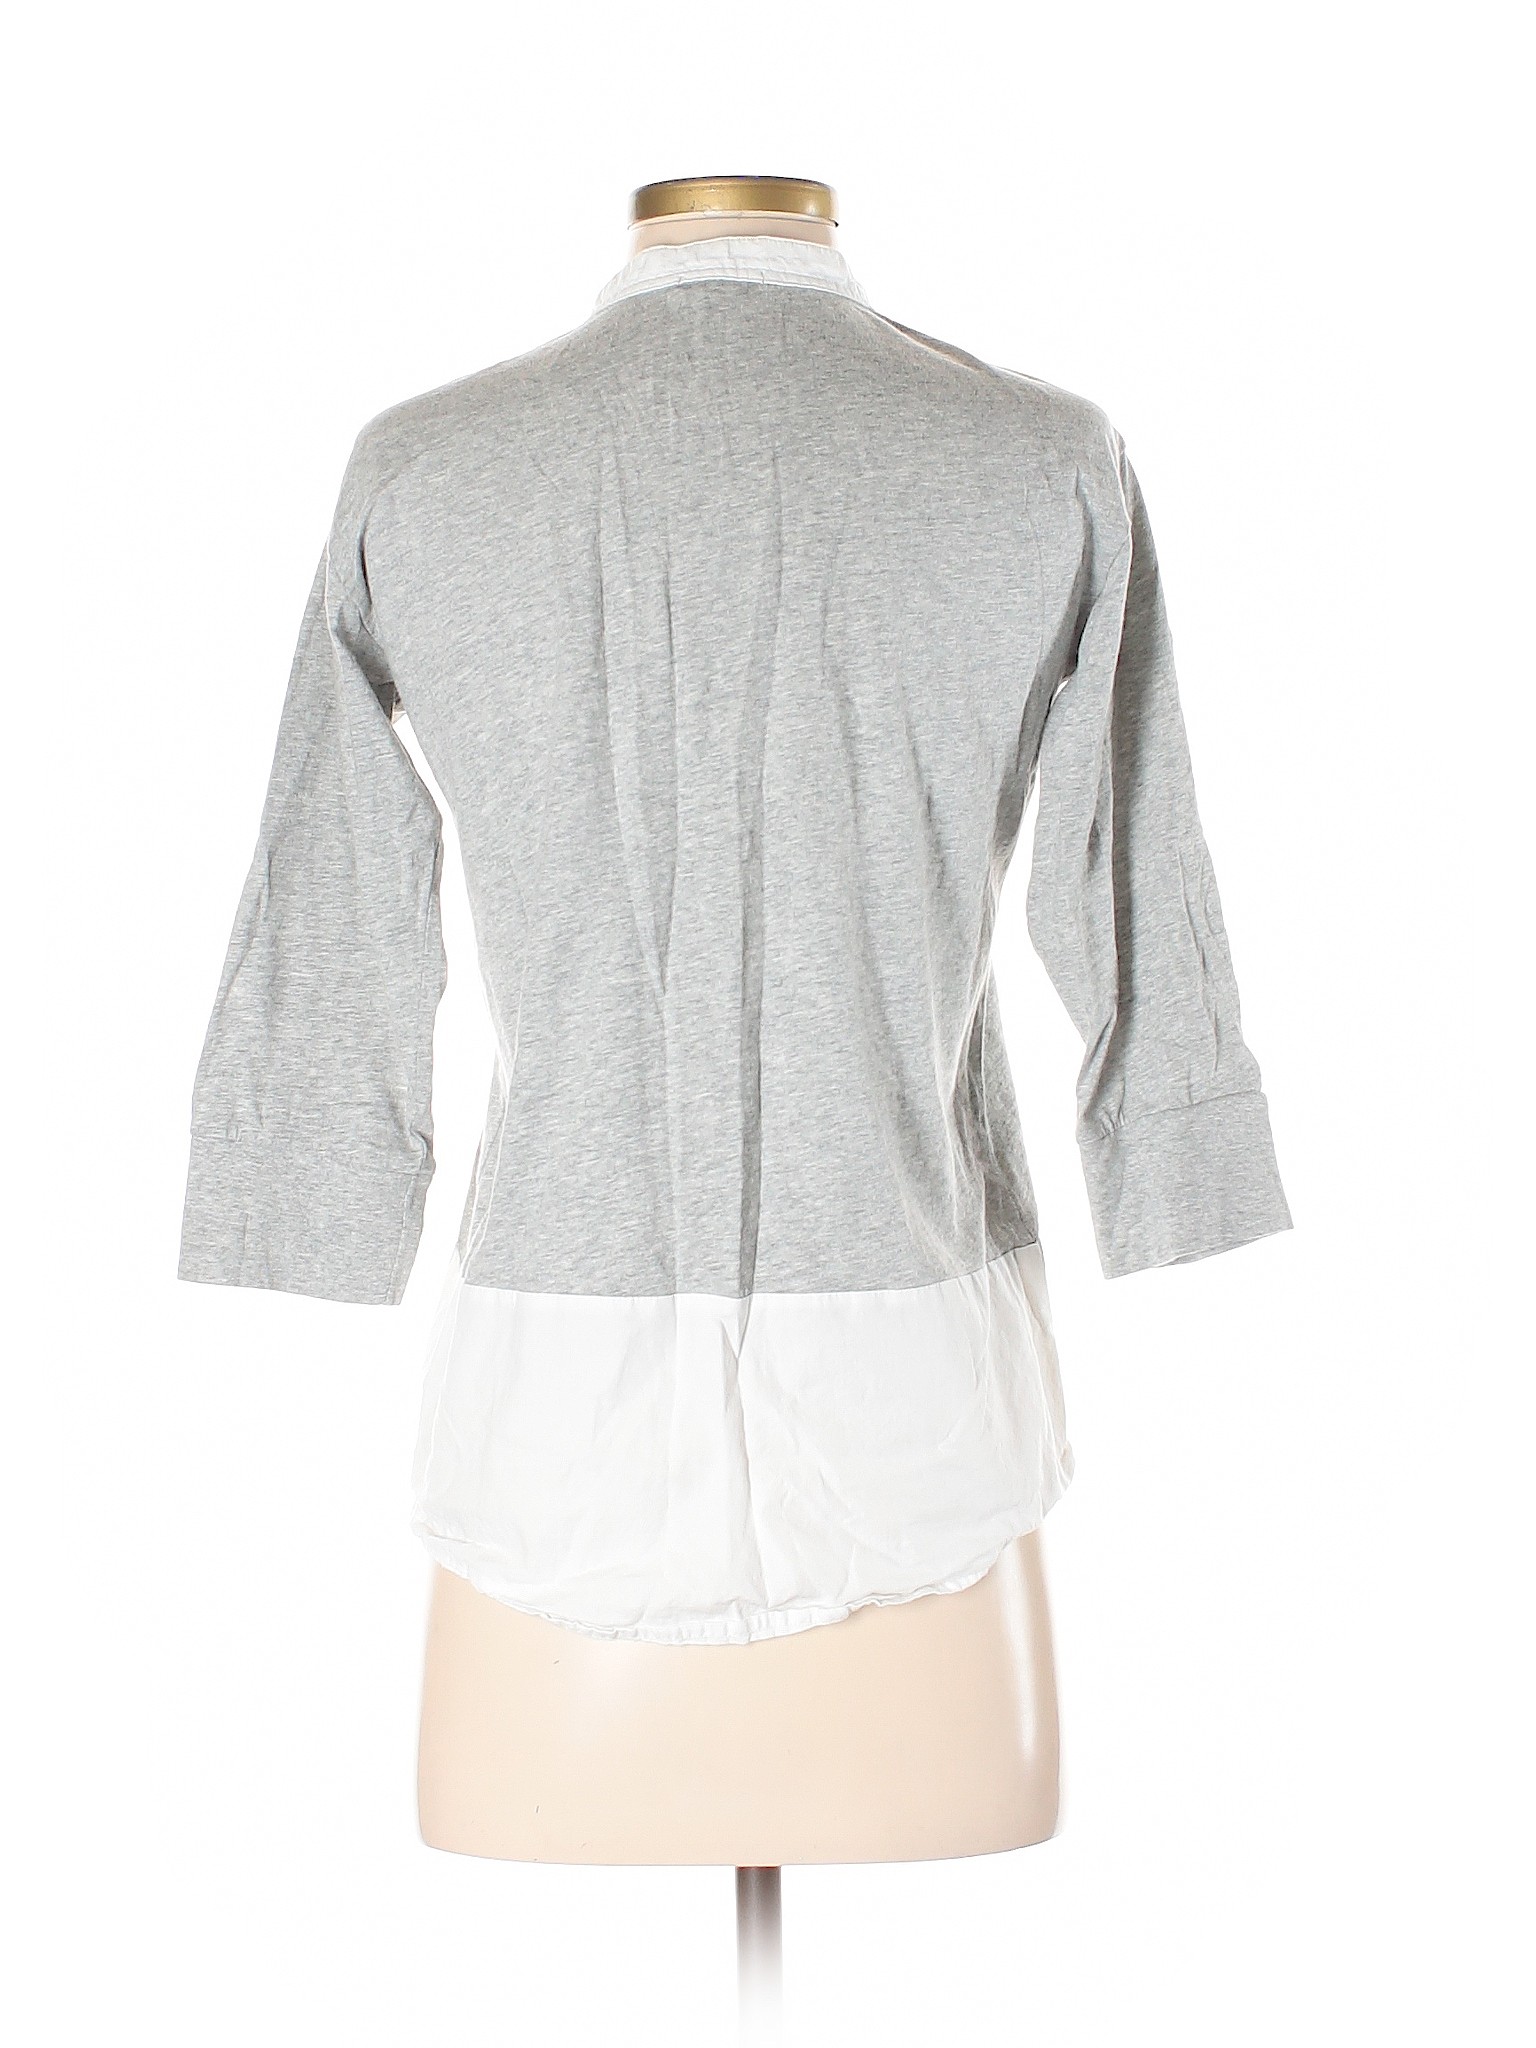 Gap Women Gray 3/4 Sleeve Button-Down Shirt XS | eBay